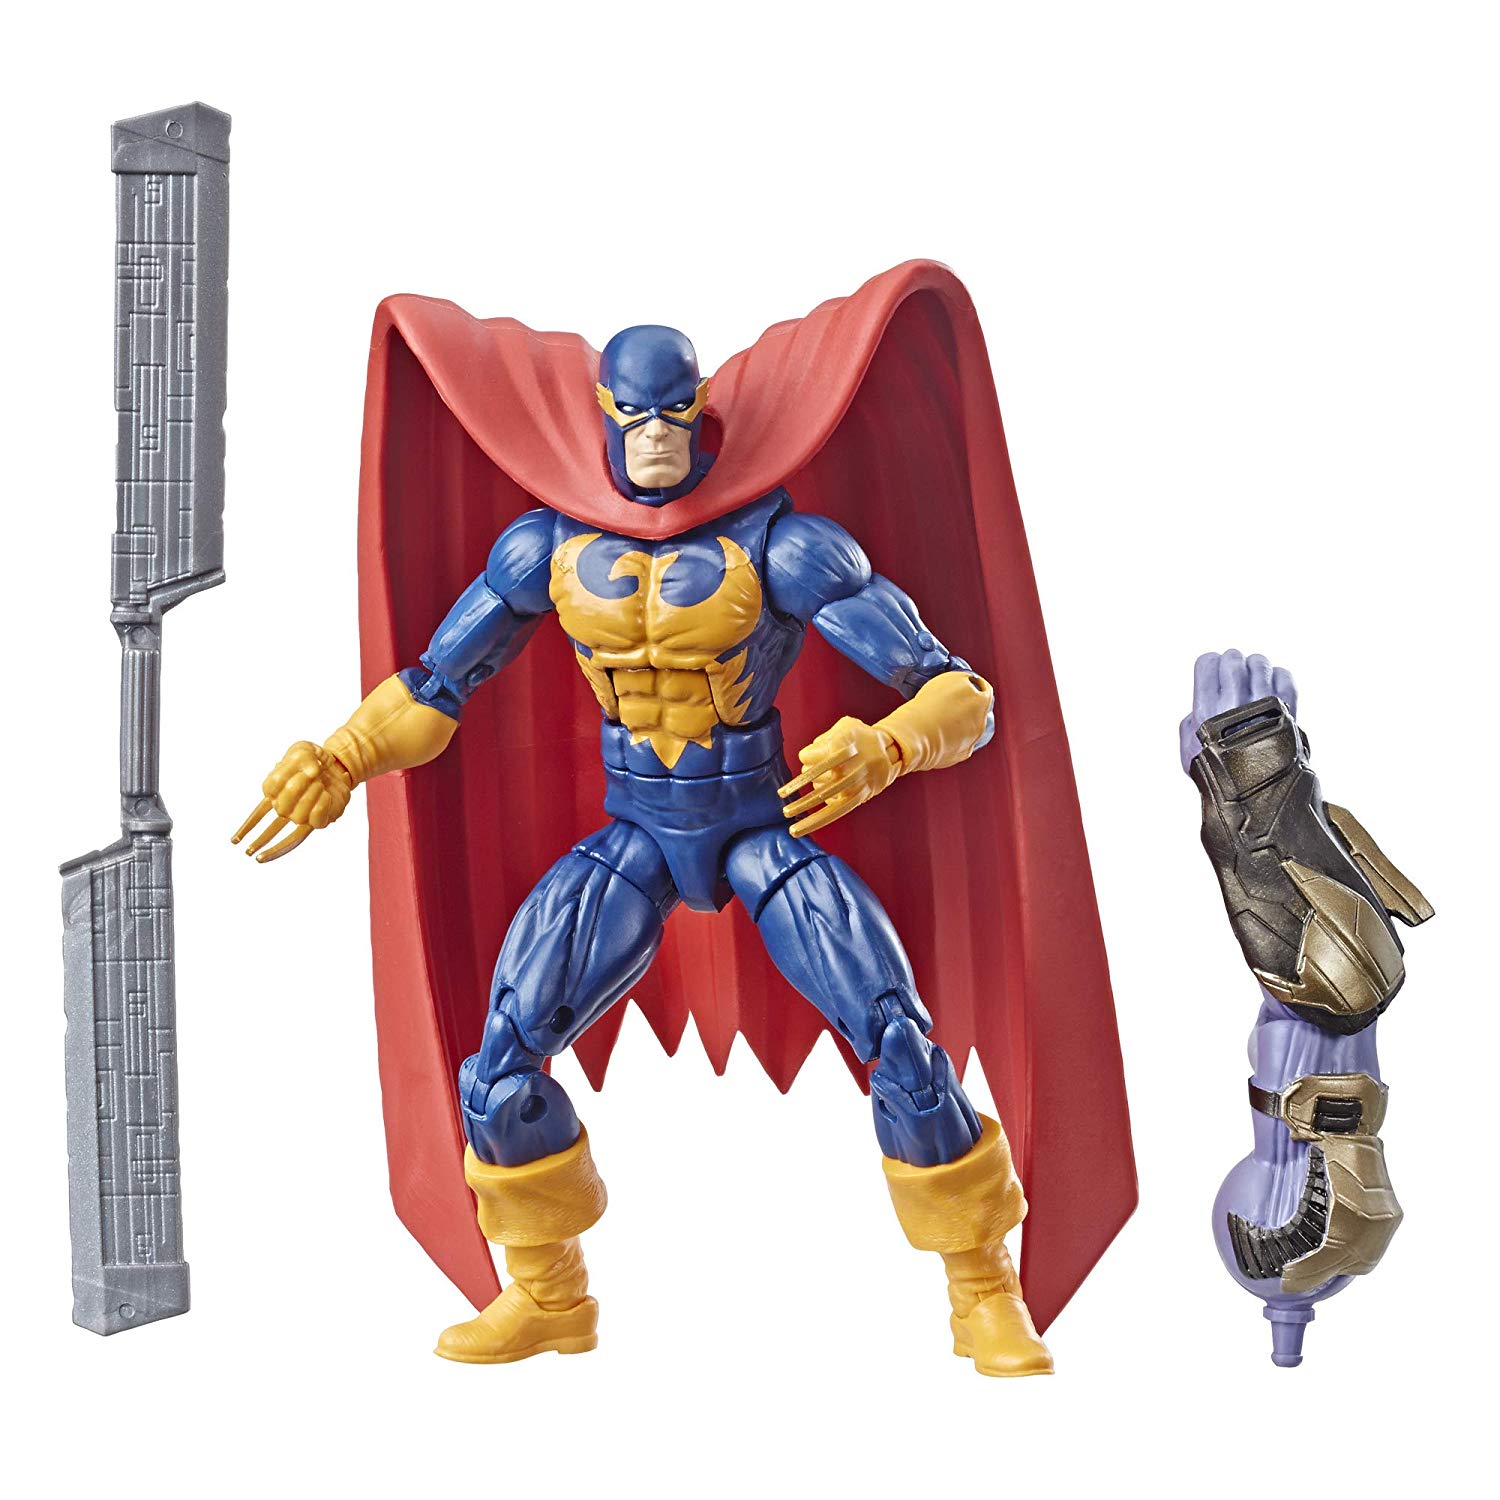 Marvel Legends Endgame Thanos 6" Nighthawk BuildAFigure-2